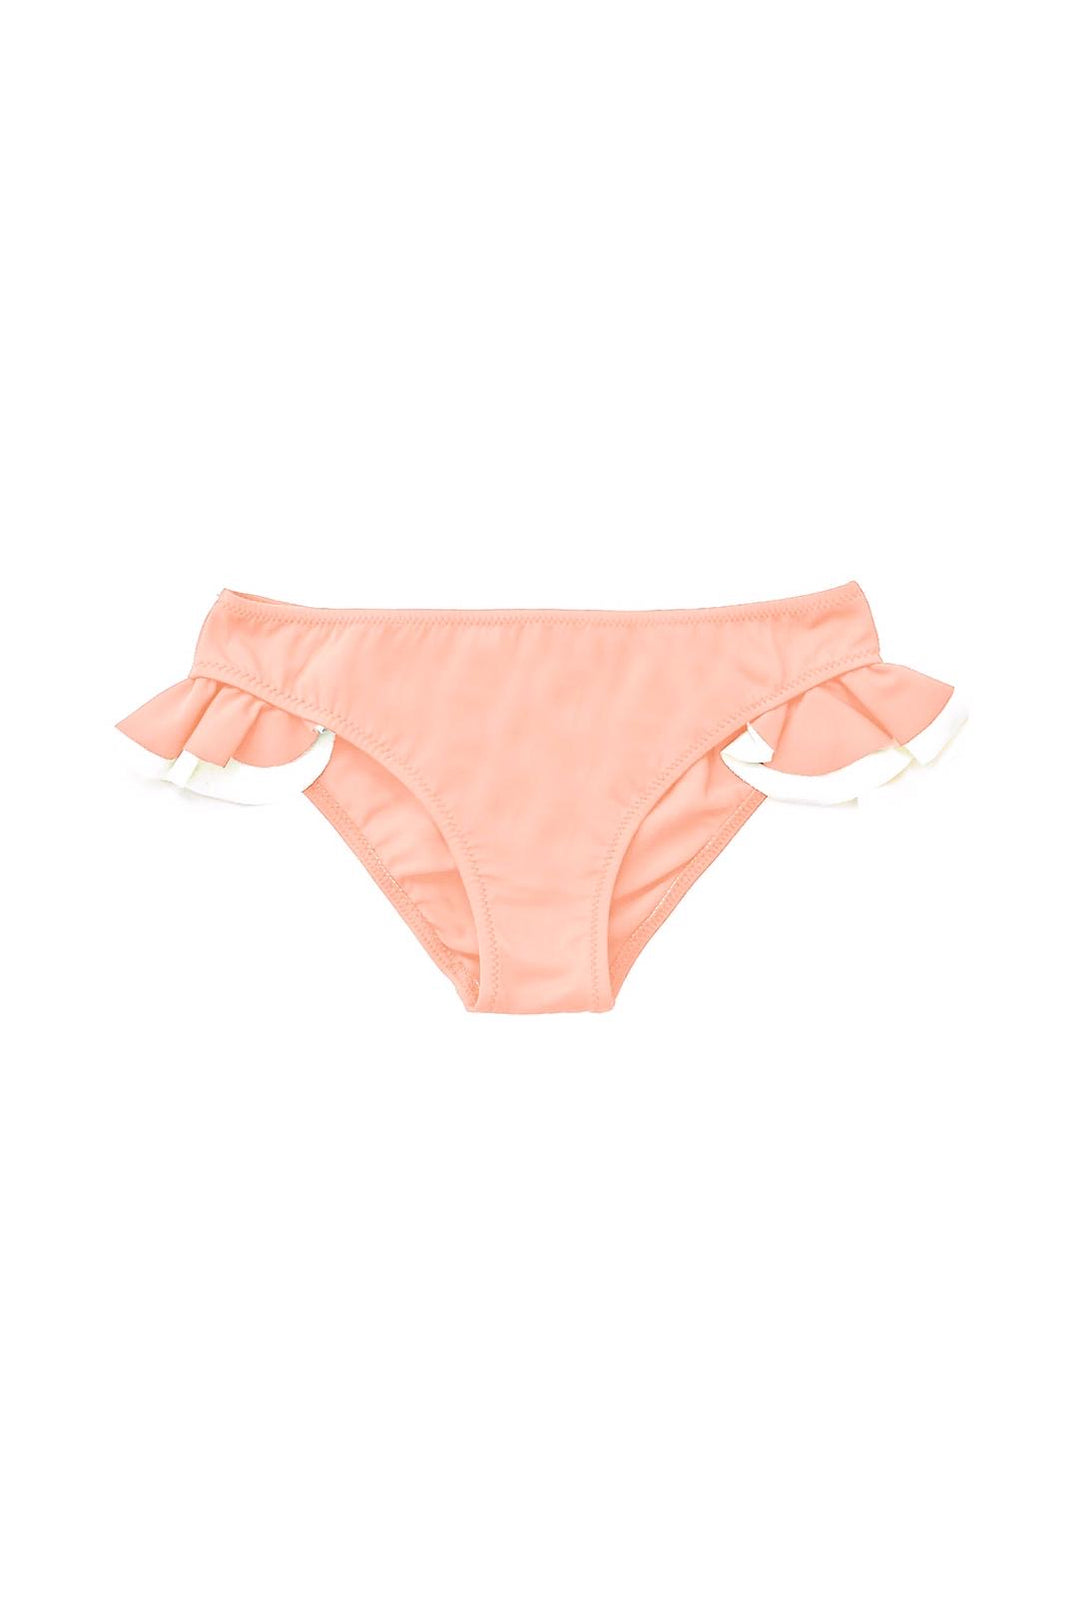 Swim Pants Nora Peach Pink - ملابس السباحة